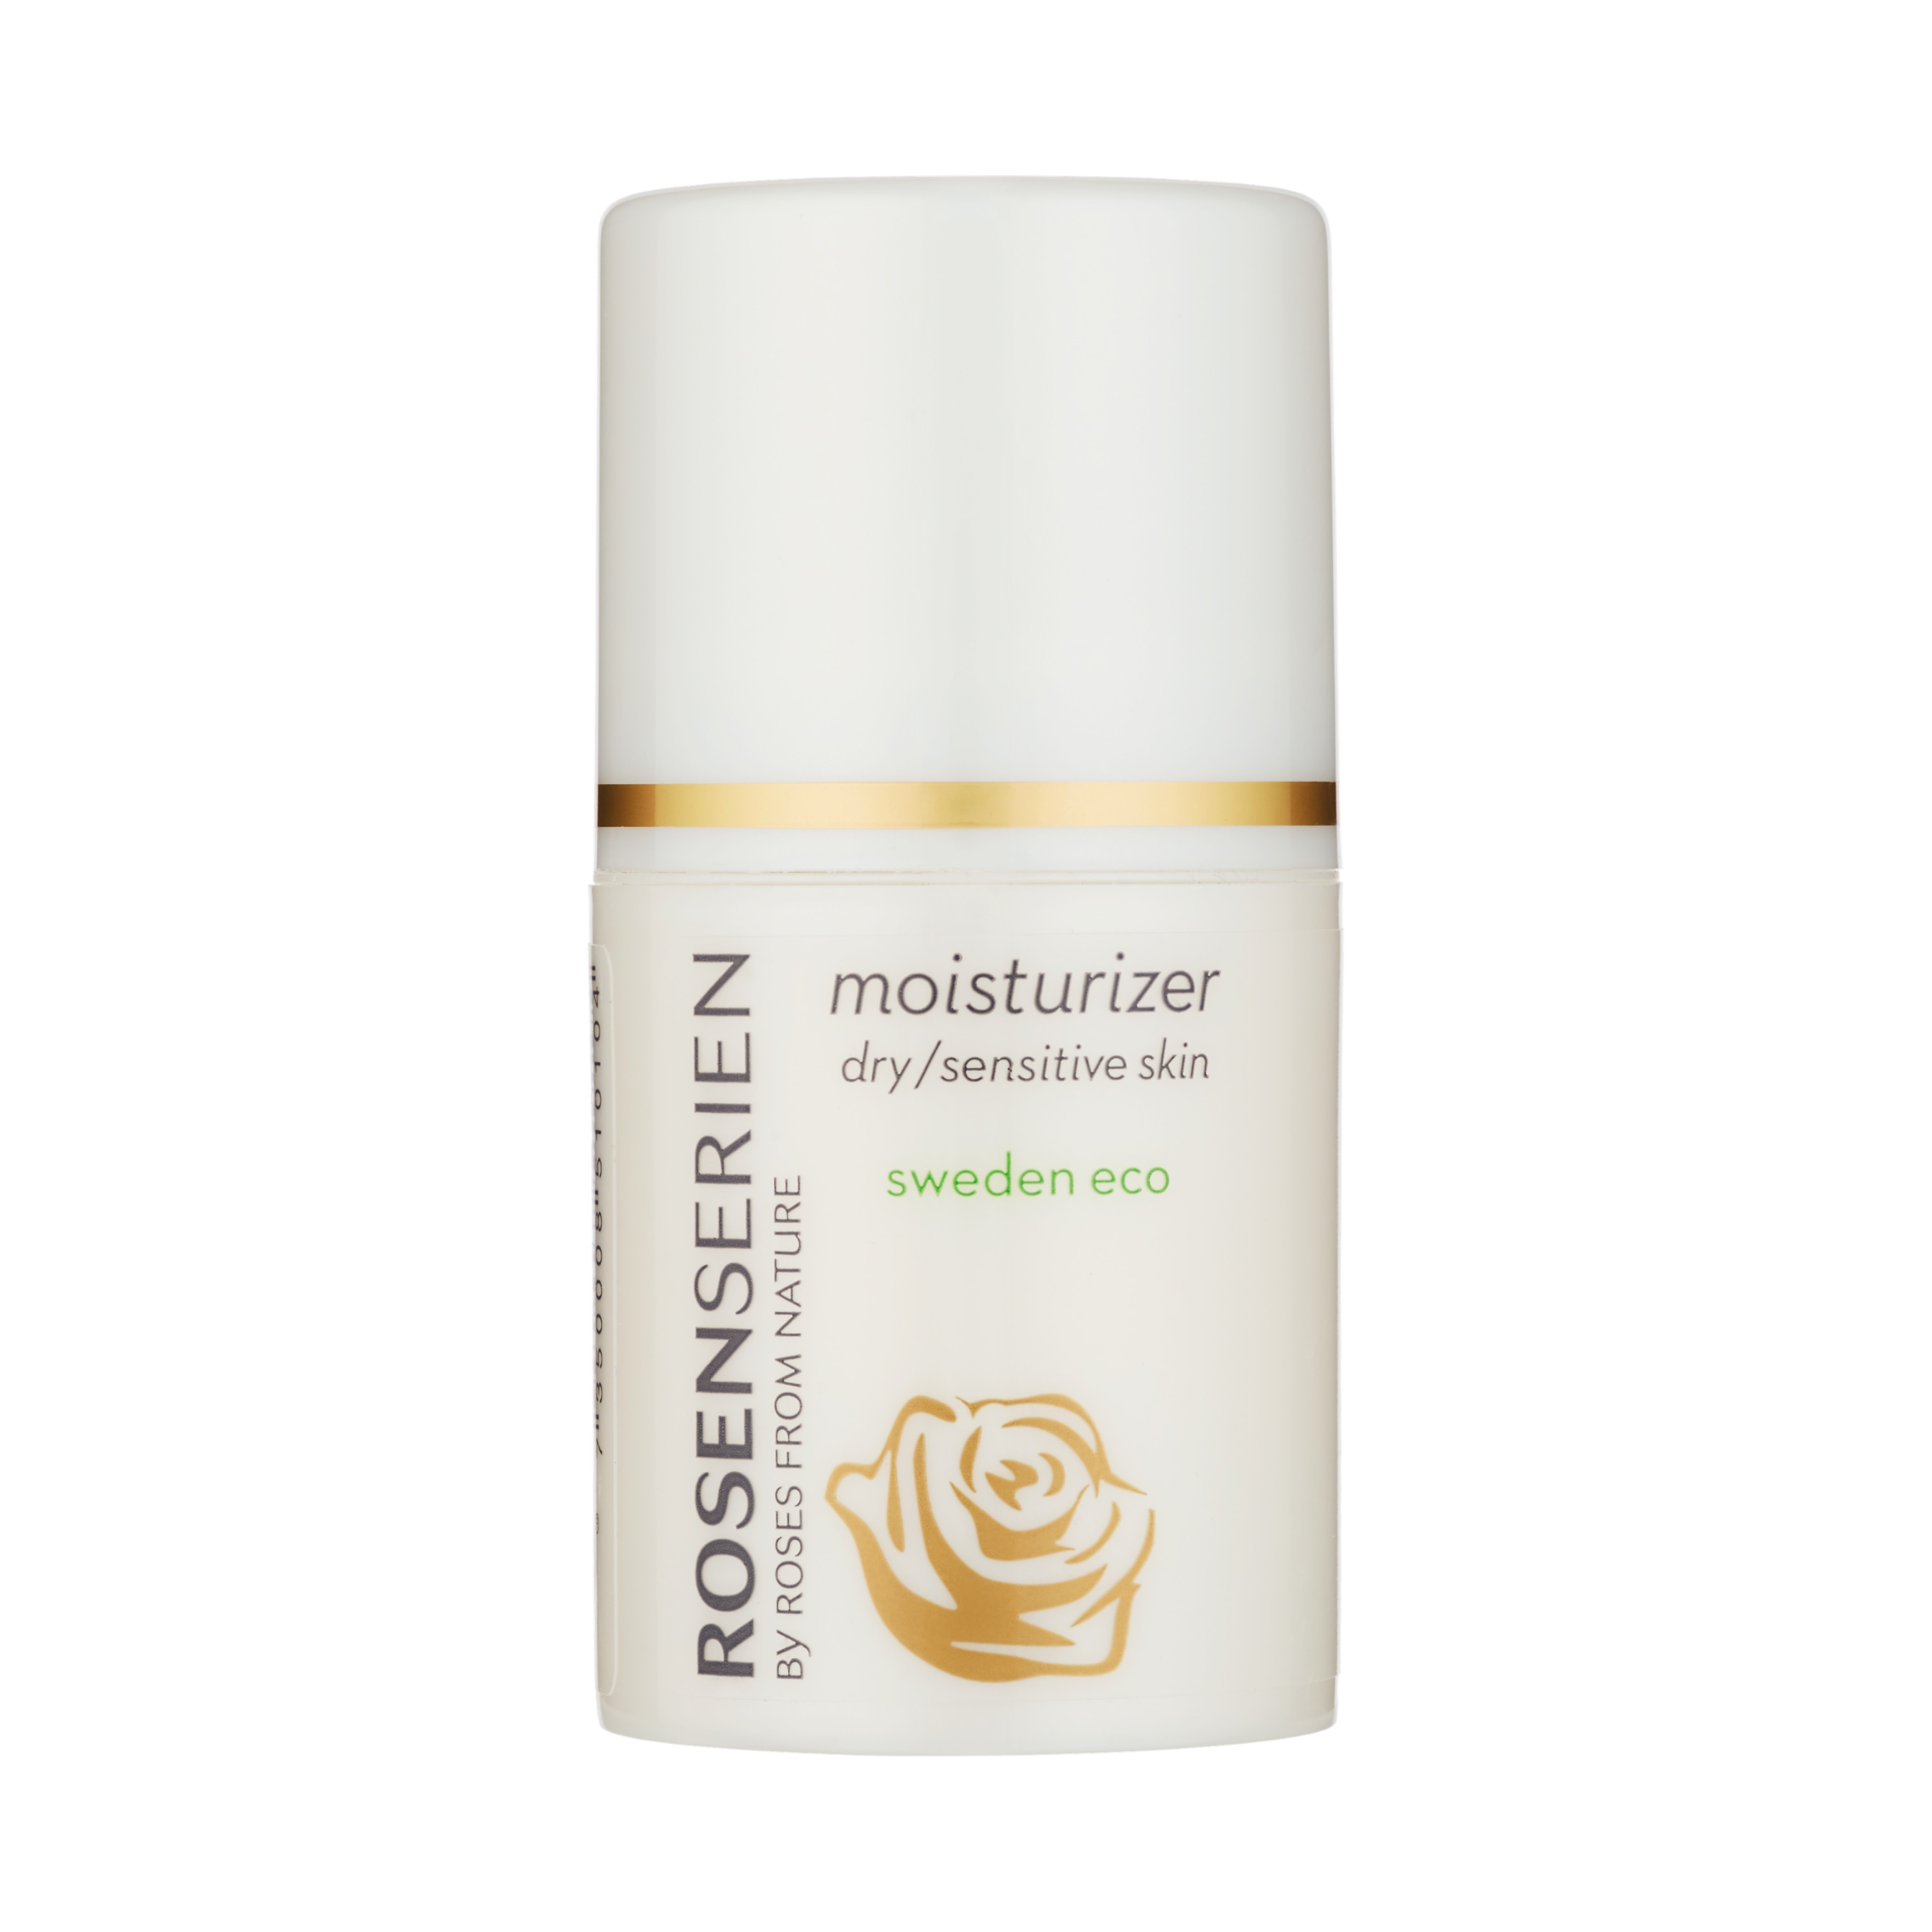 Moisturizer Dry/Sensitive Skin 50ml